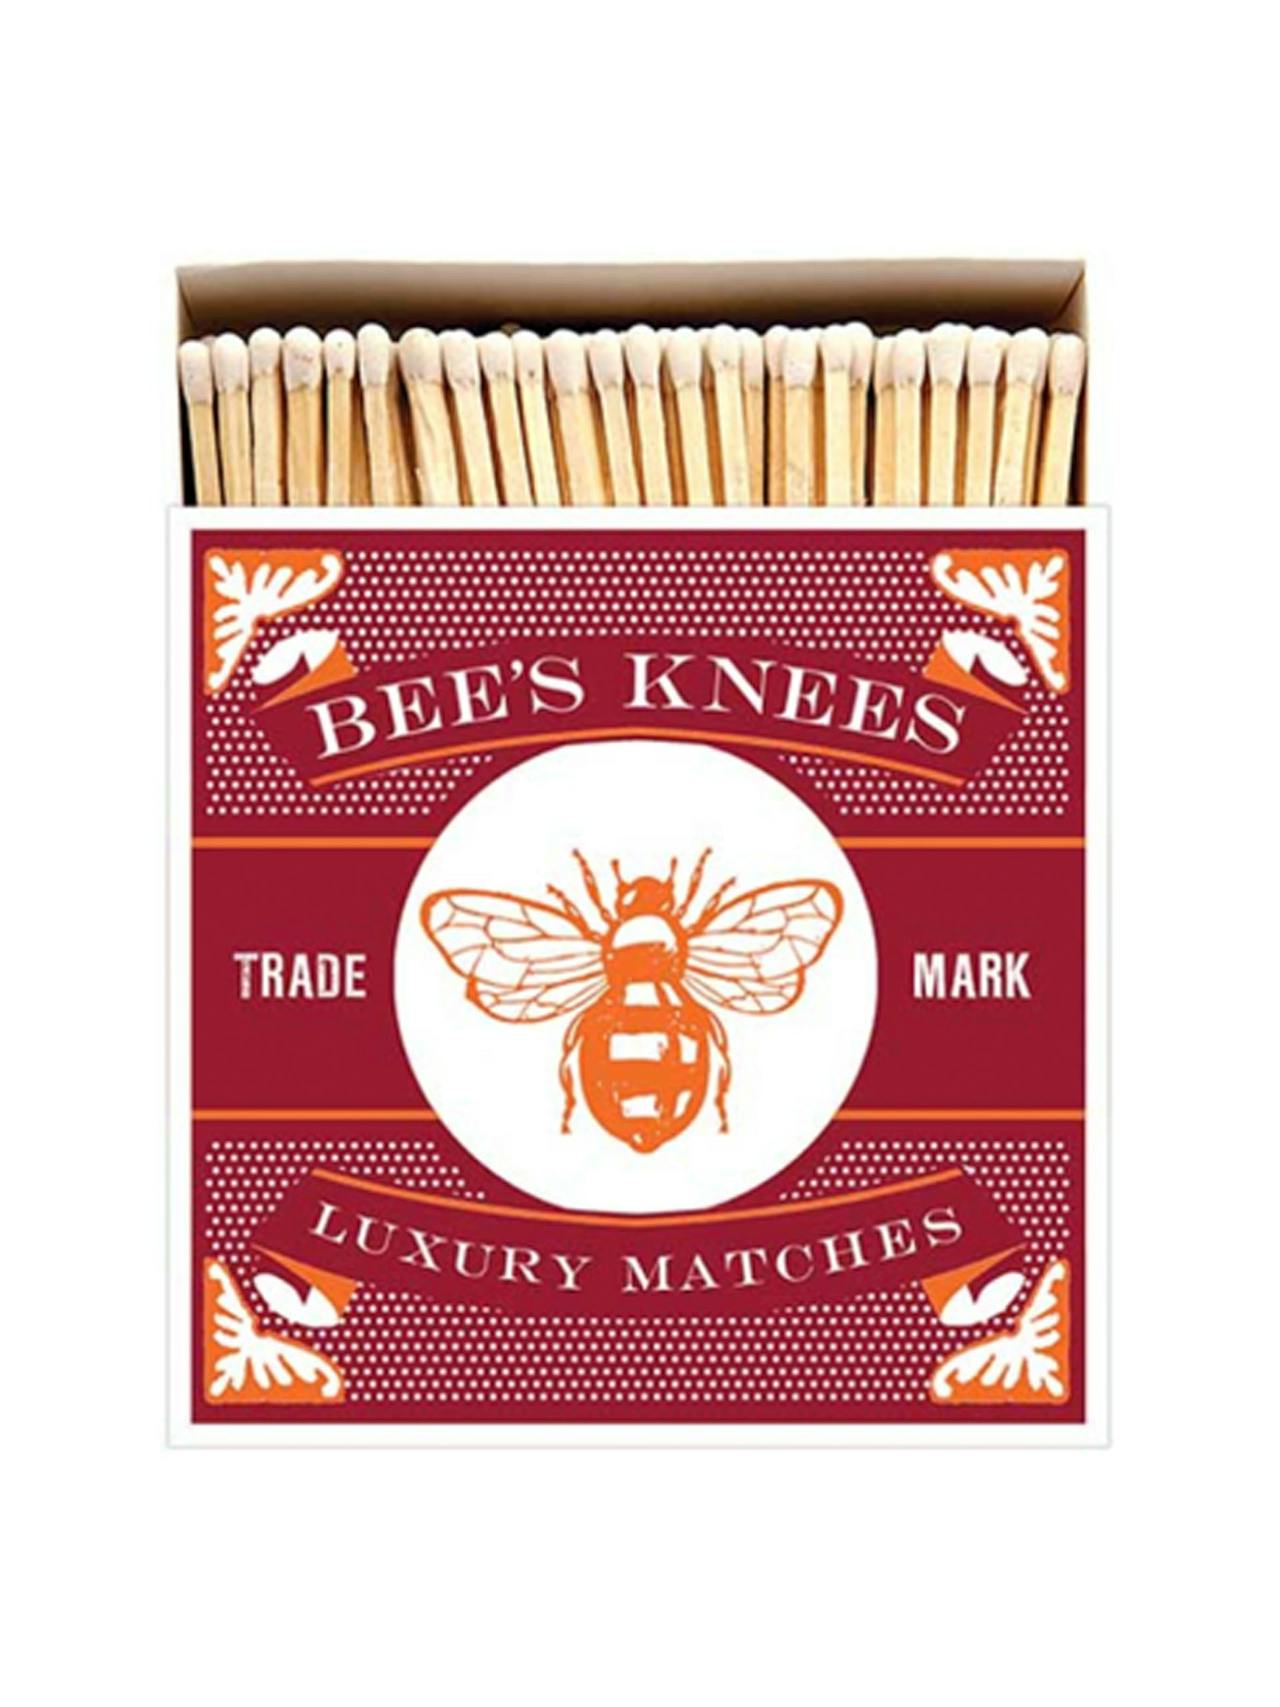 Bee's Knees matchbox